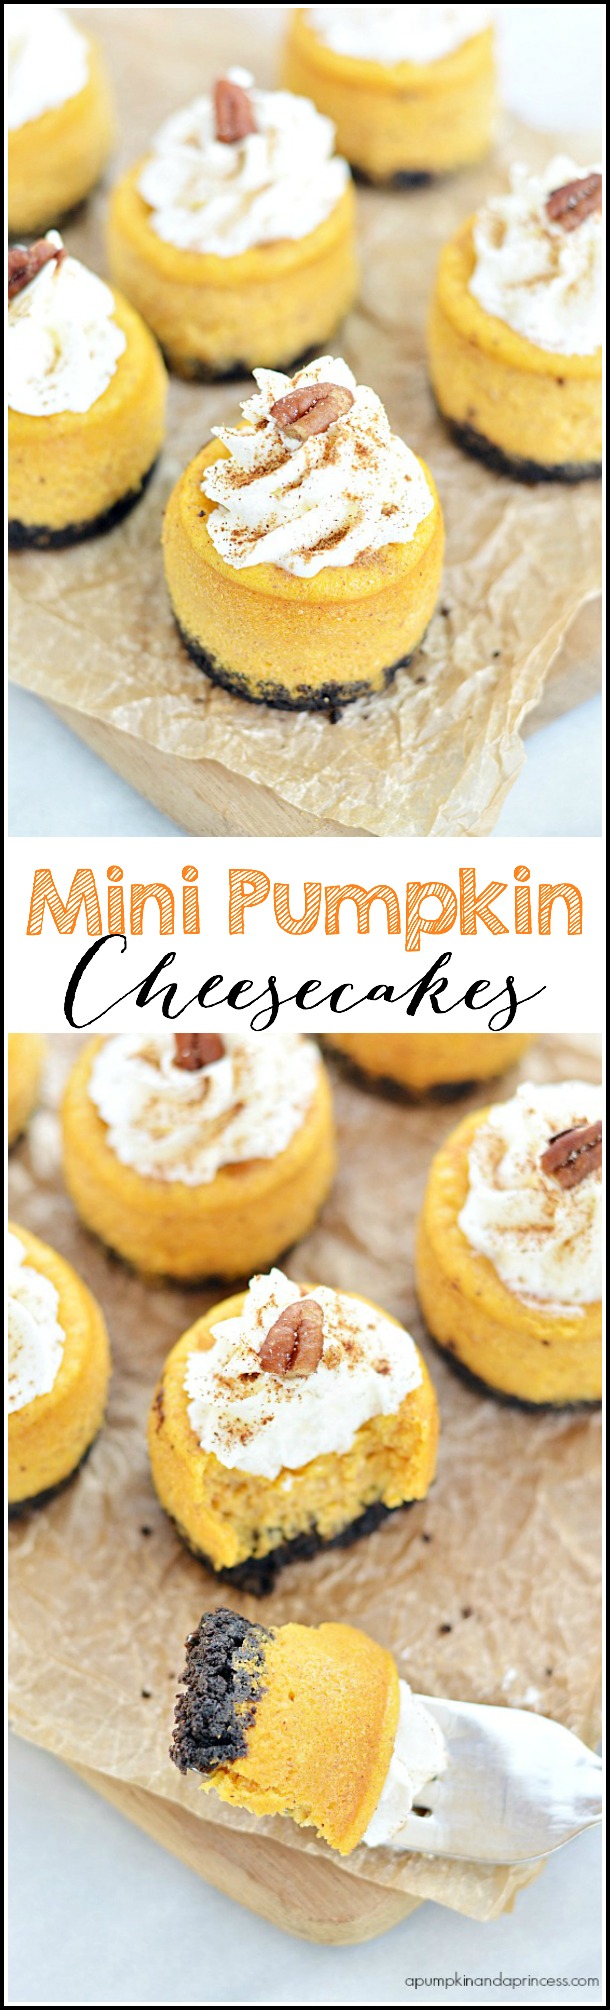 Pumpkin-cheesecakes-recipe